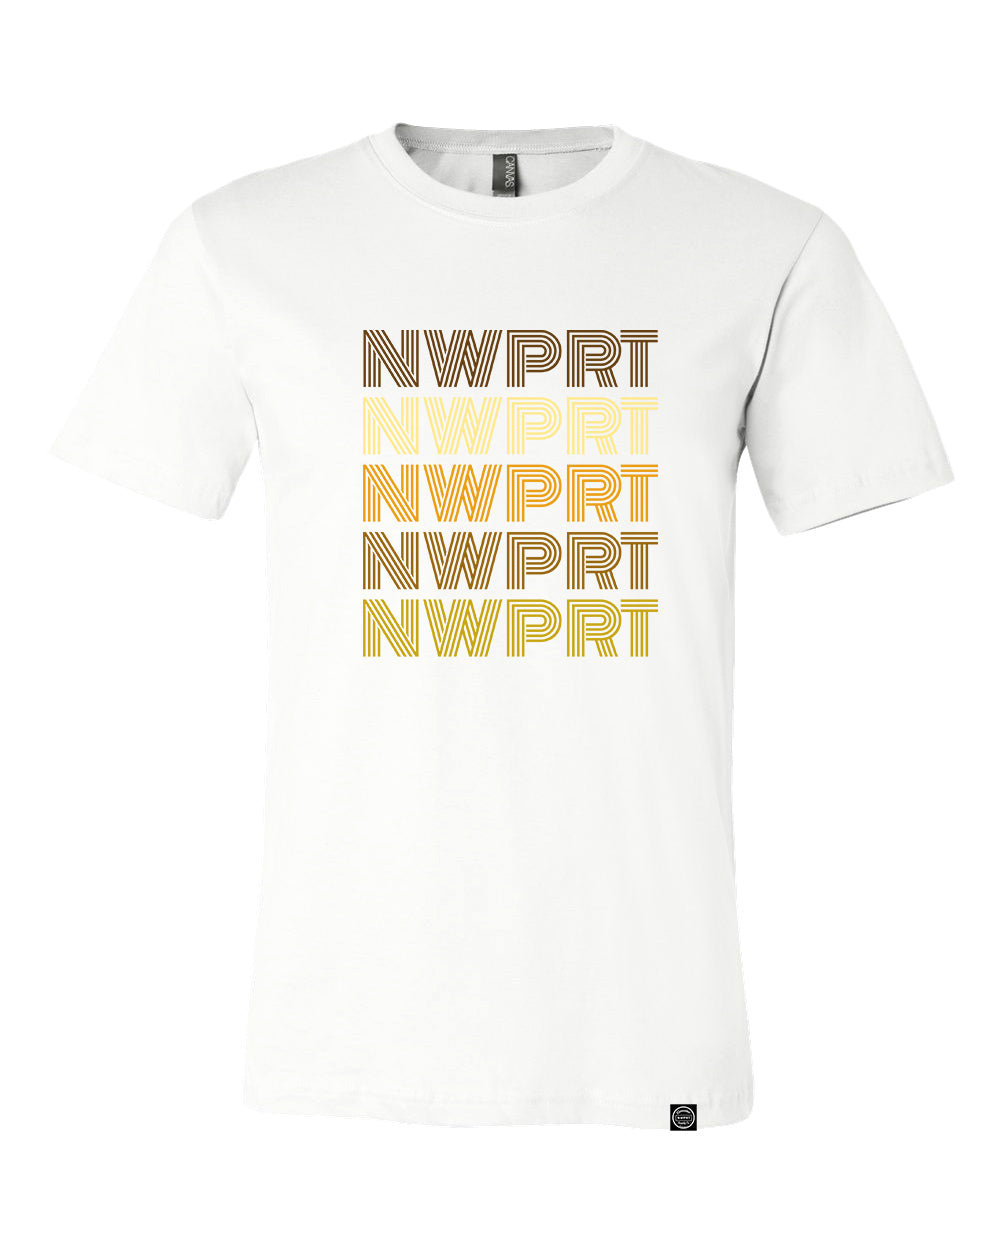 NWPRT Retro Vibes Earth Tones T-Shirt